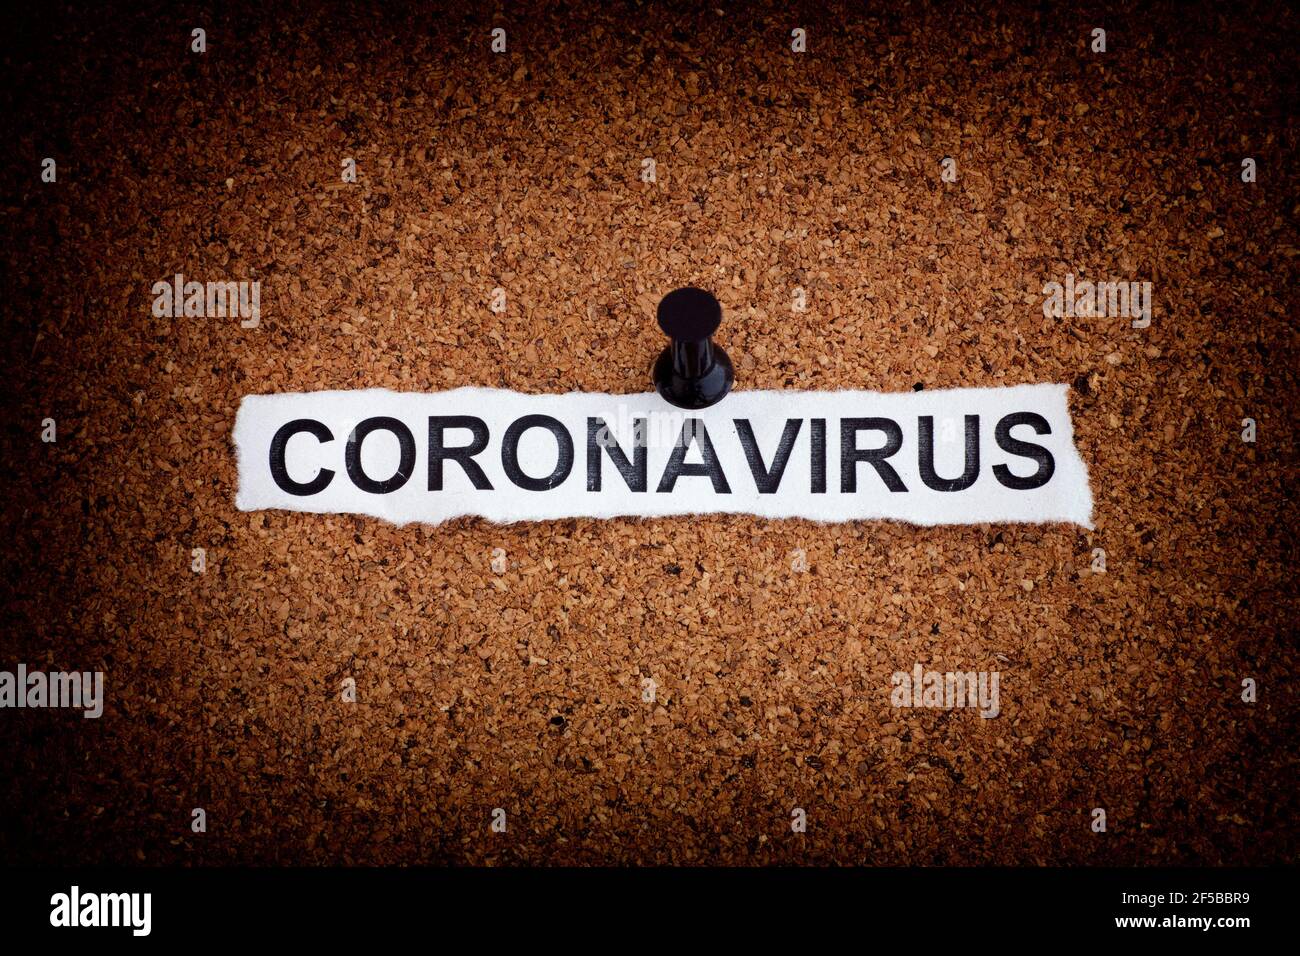 Coronavirus. Zerrissenes Stück Papier mit dem Wort Coronavirus auf einem Korkbrett. Nahaufnahme. Stockfoto